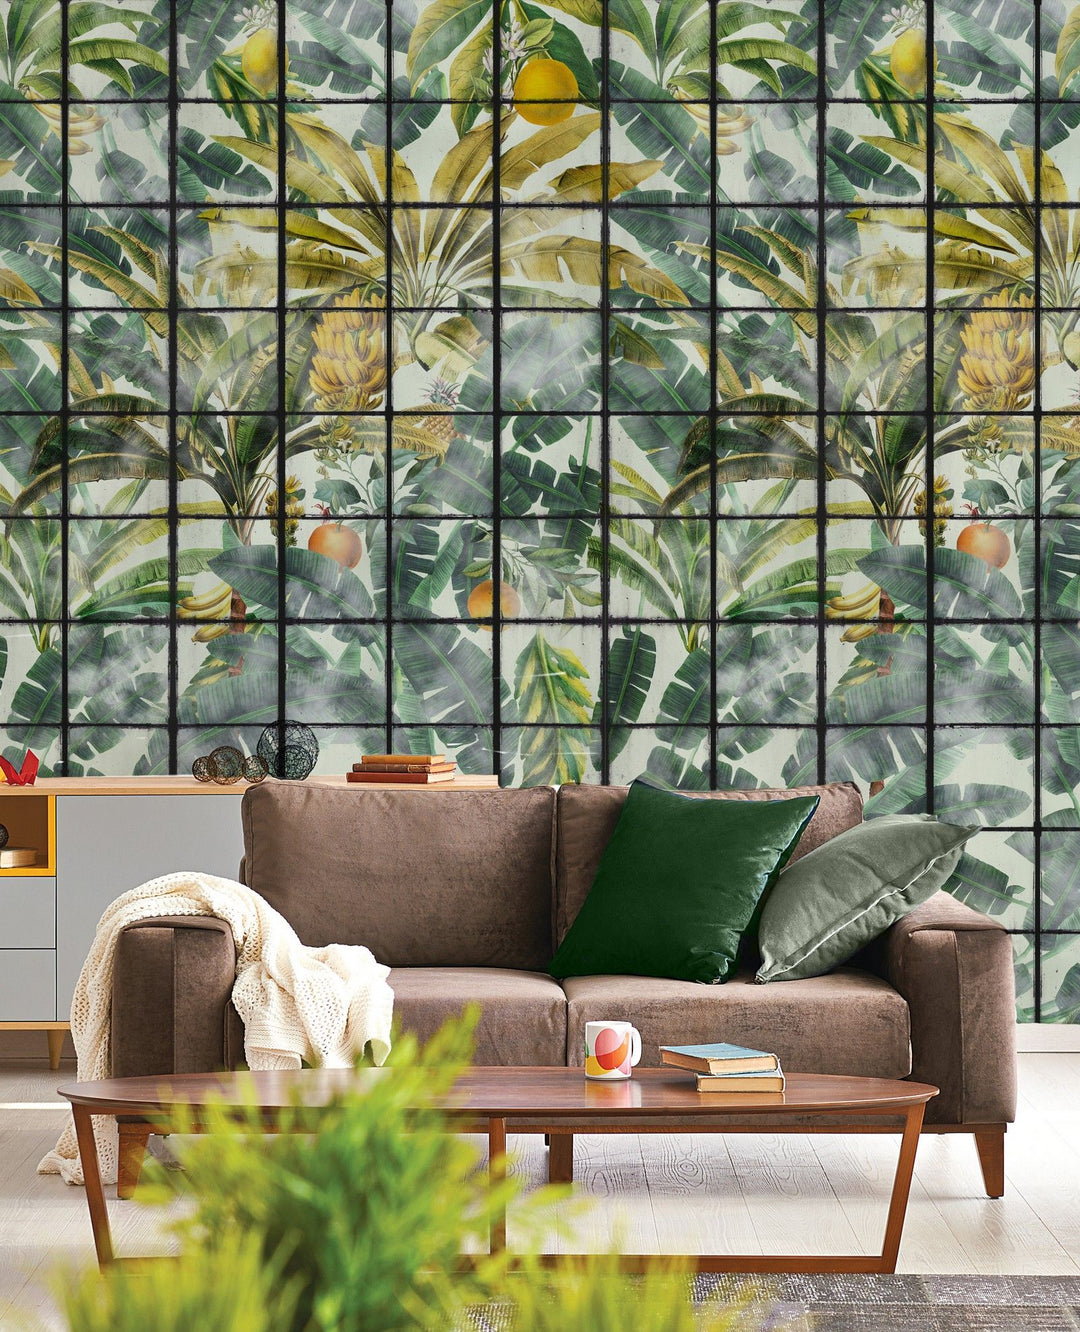 mind-the-gap-orangerie-wallpaper-the-florist-collection-bananas-orange-pineapples-botanical-garden-interior-lounge